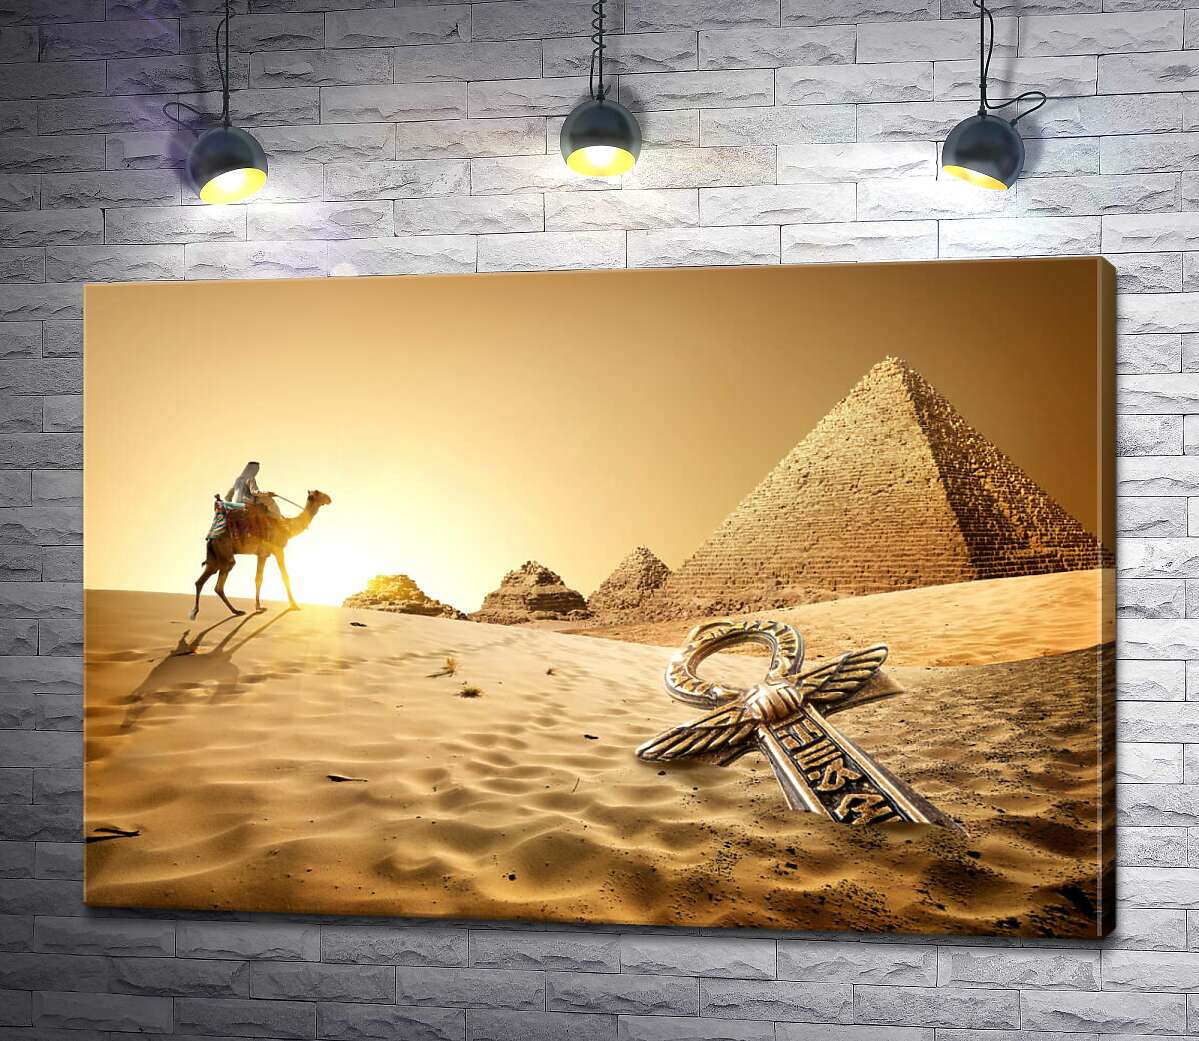 картина Символ жизни - анх в песках пустыни на фоне египетских пирамид